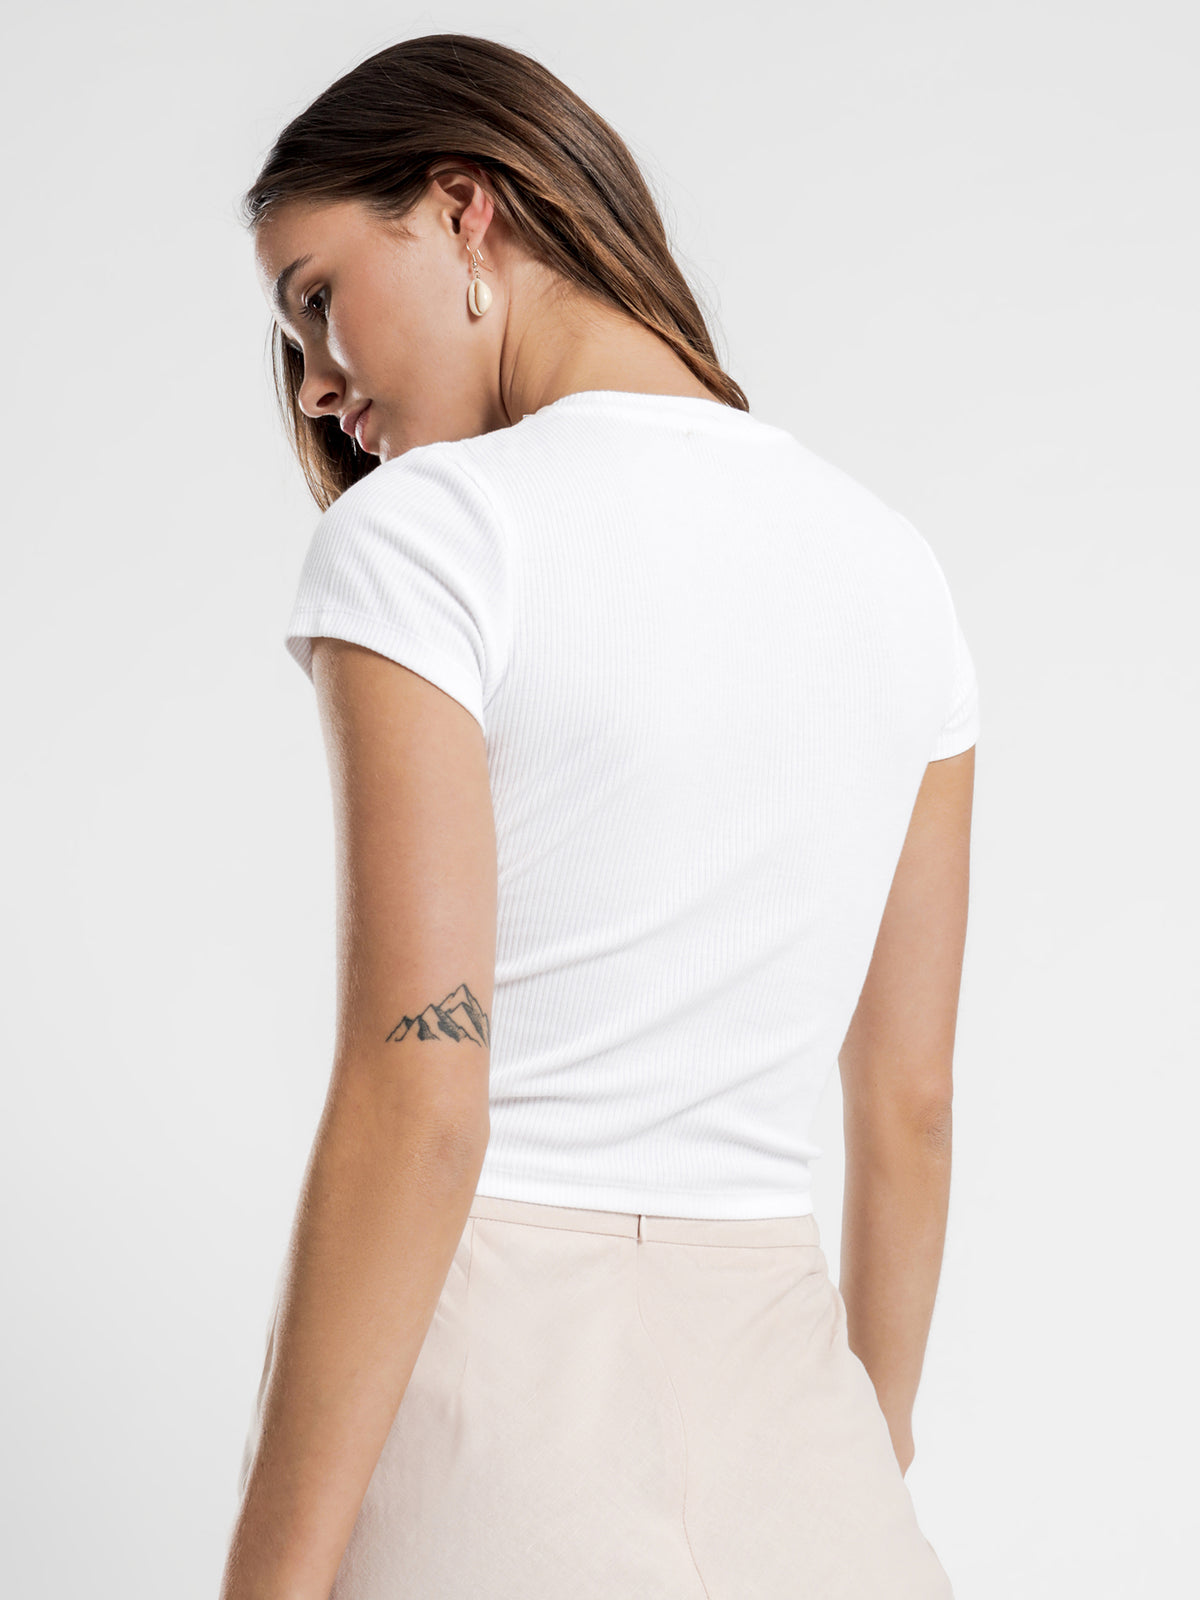 Greta T-Shirt in White